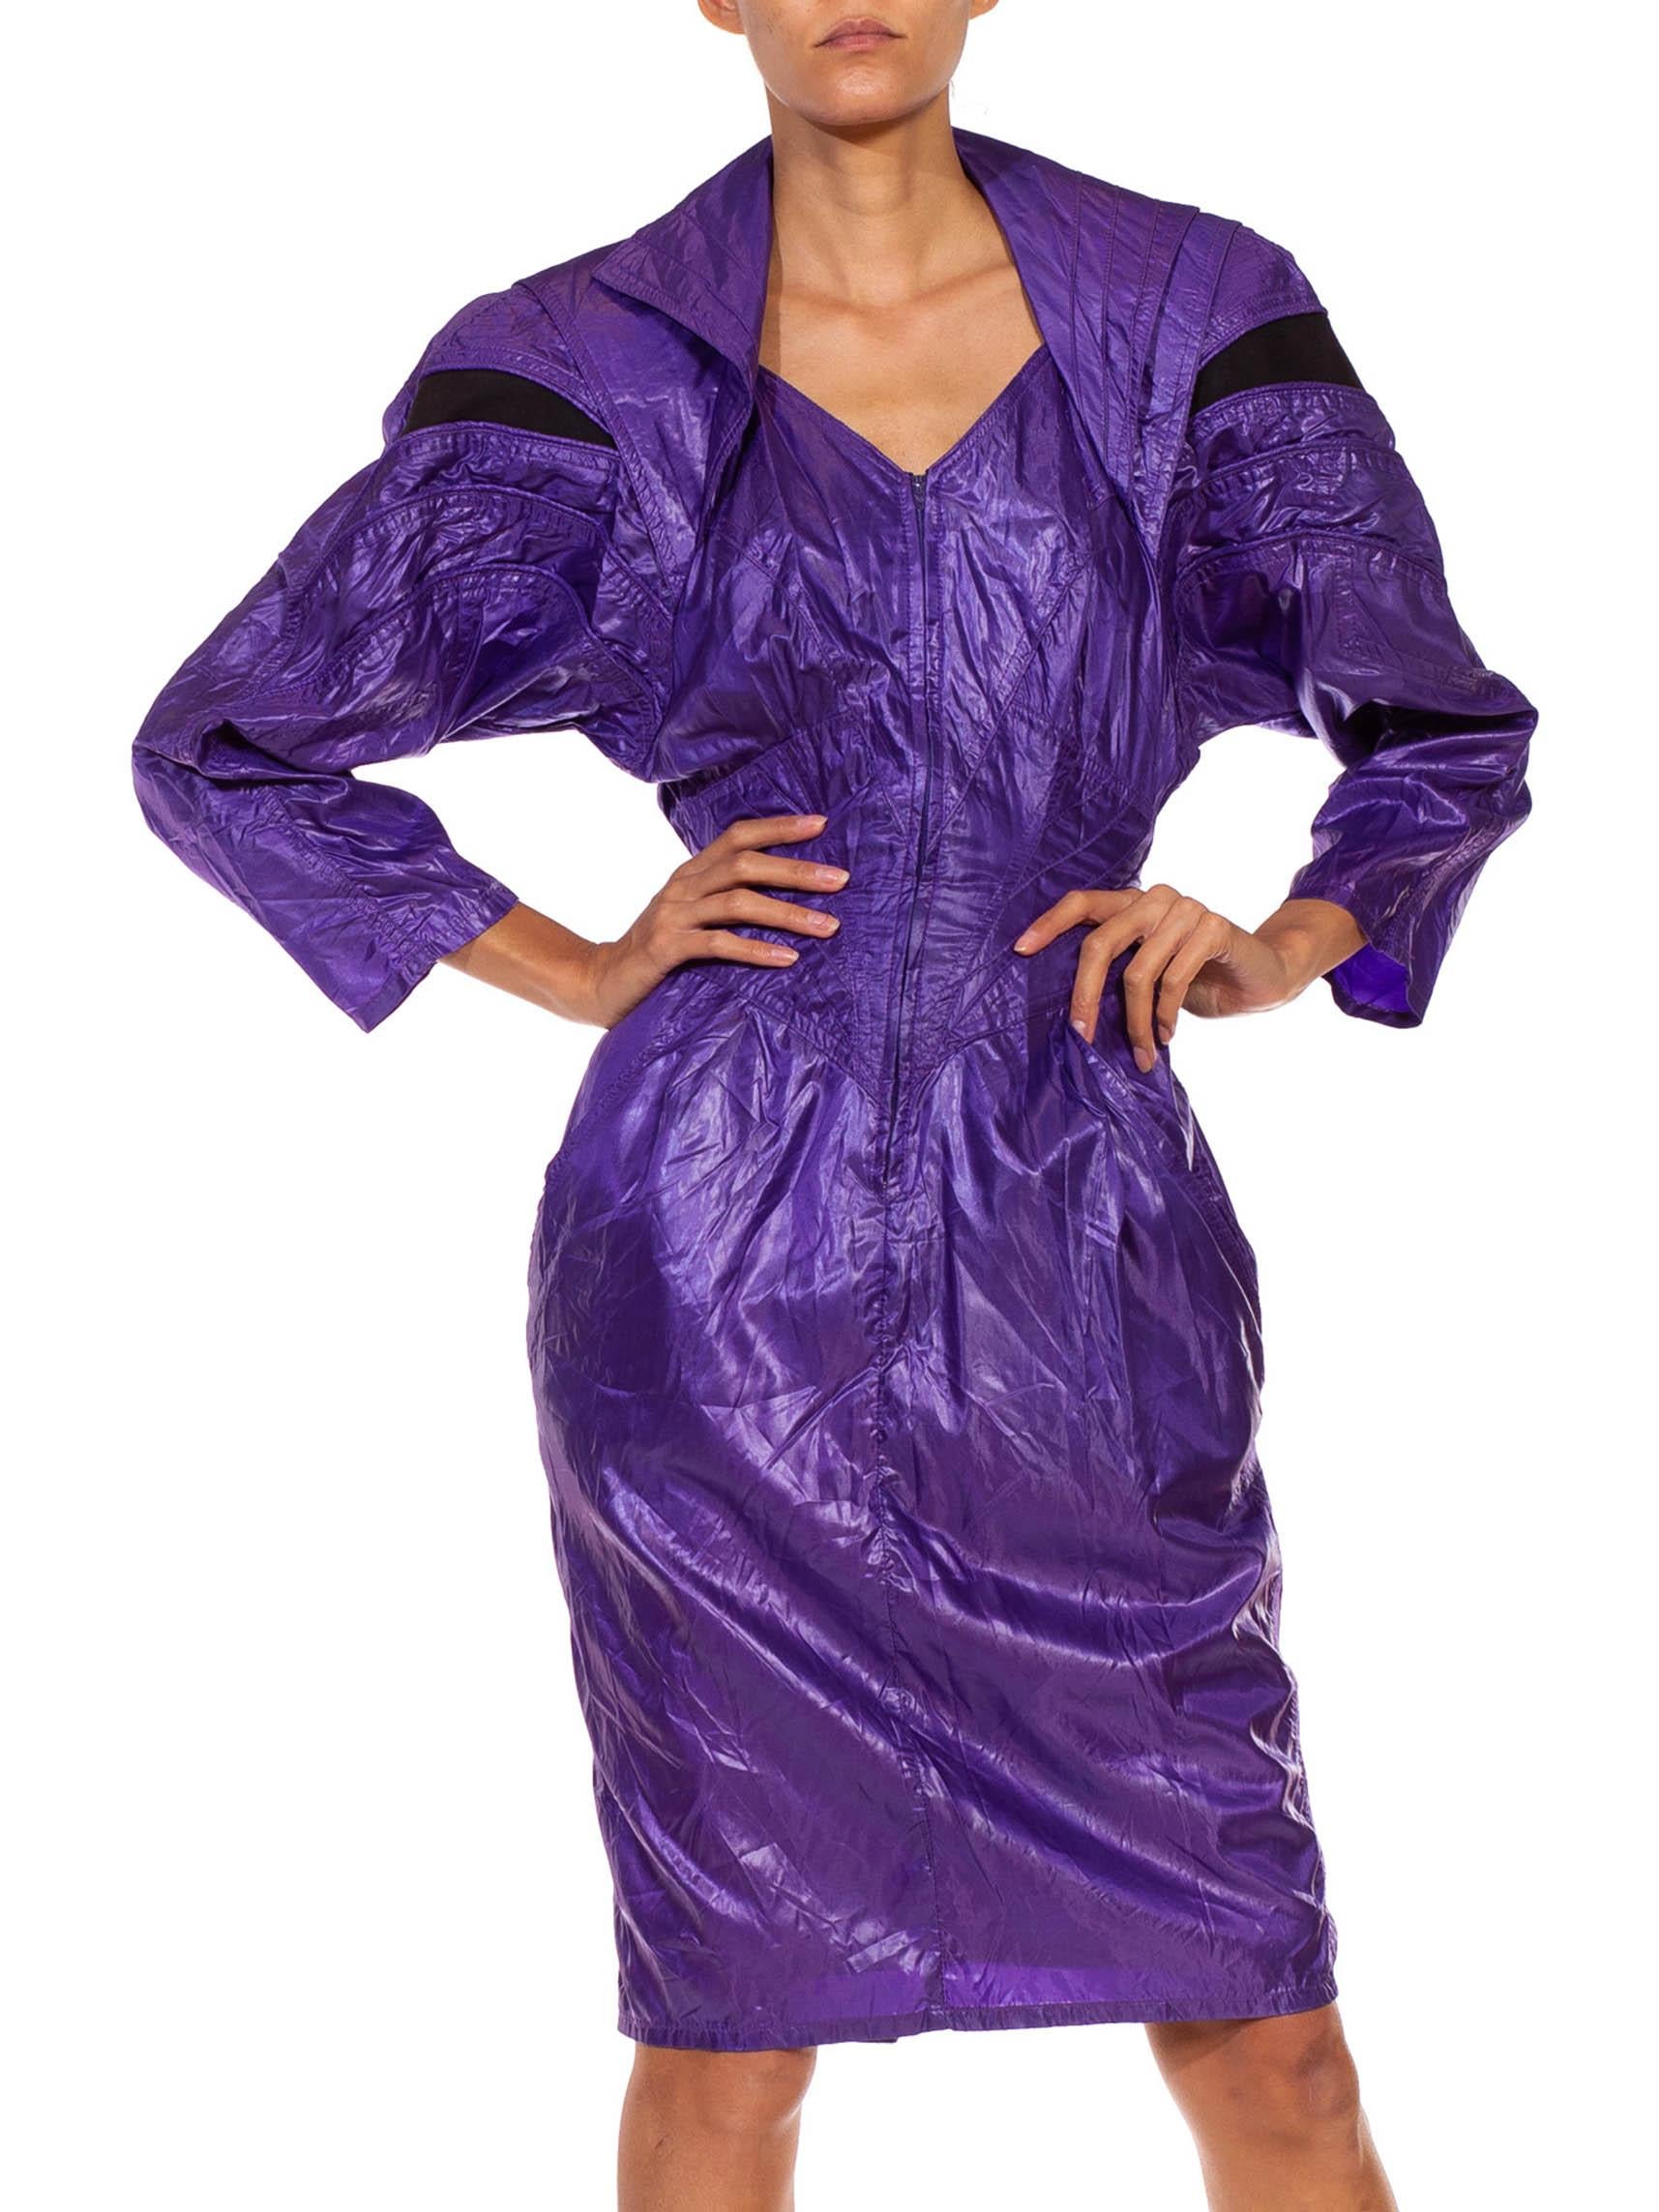 purple vinyl dress